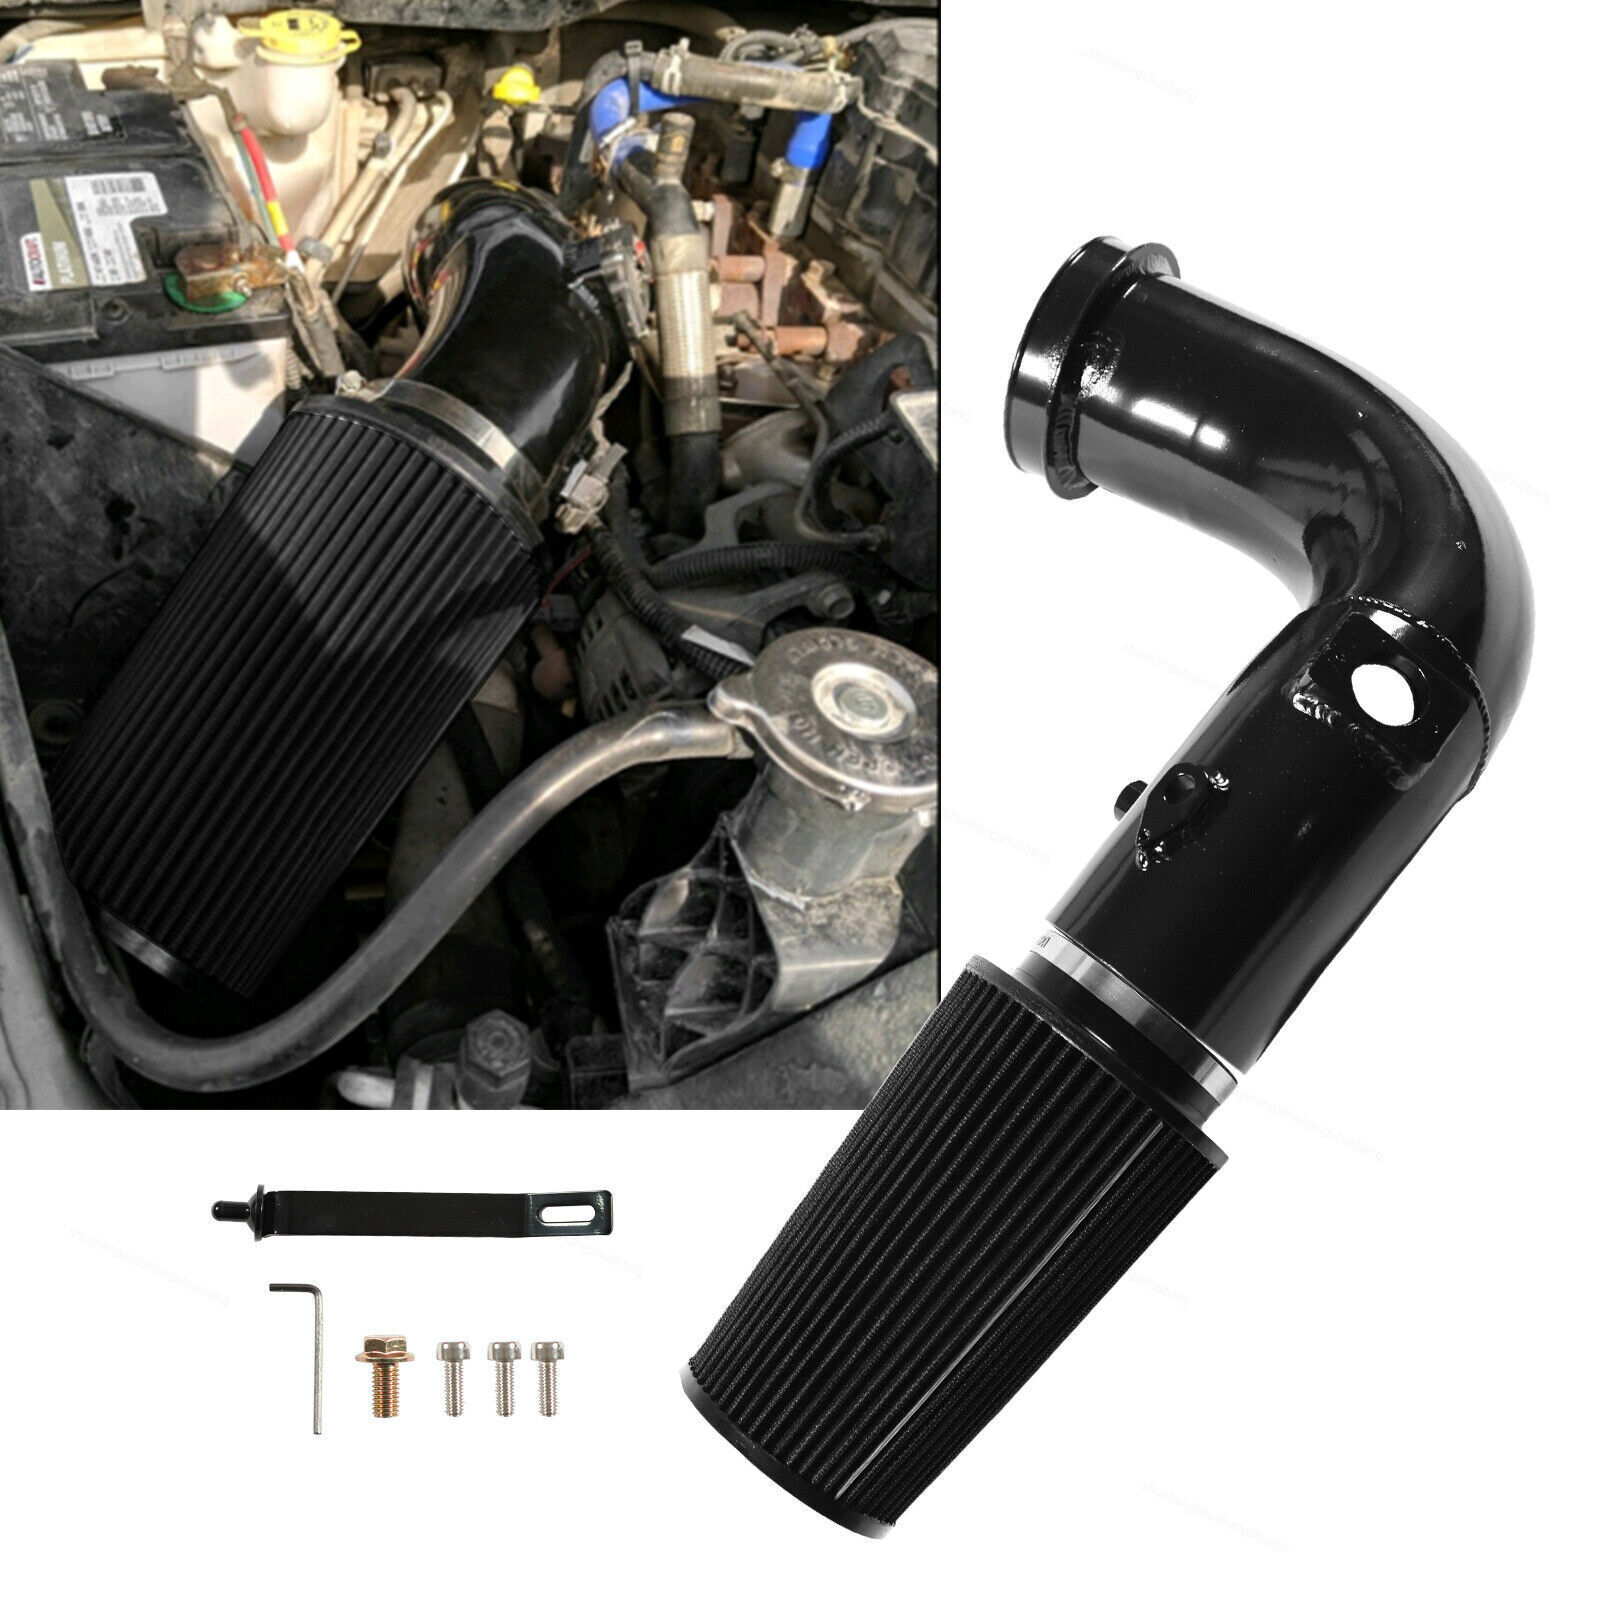 Car Cold Air Intake Kit + Filter For 2007-2012 Dodge Ram 6.7L Cummins Diesel